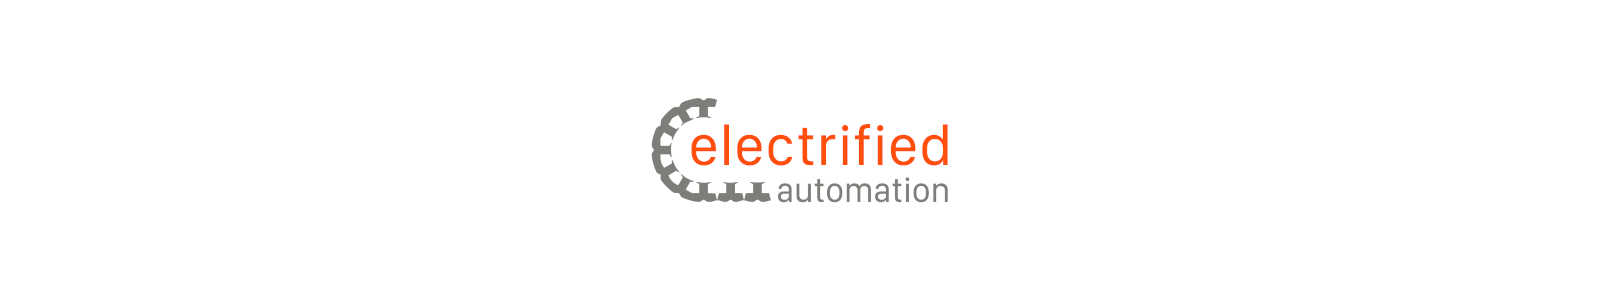 Electrified Automation